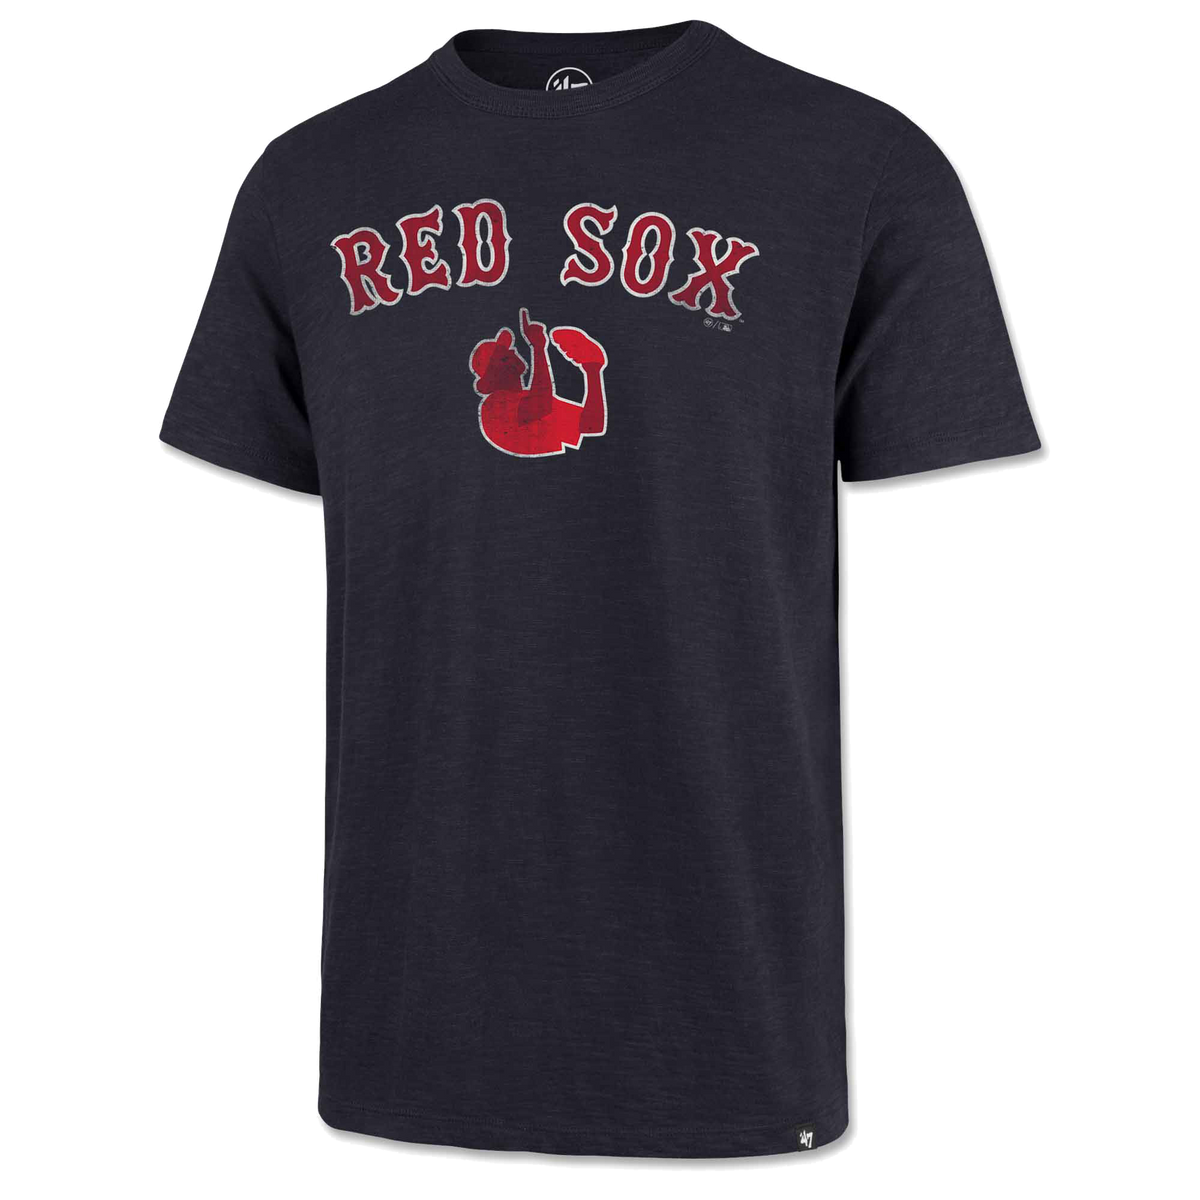 Pedro Martinez Boston Red Sox Baseball Retro Shirt, hoodie, longsleeve,  sweater